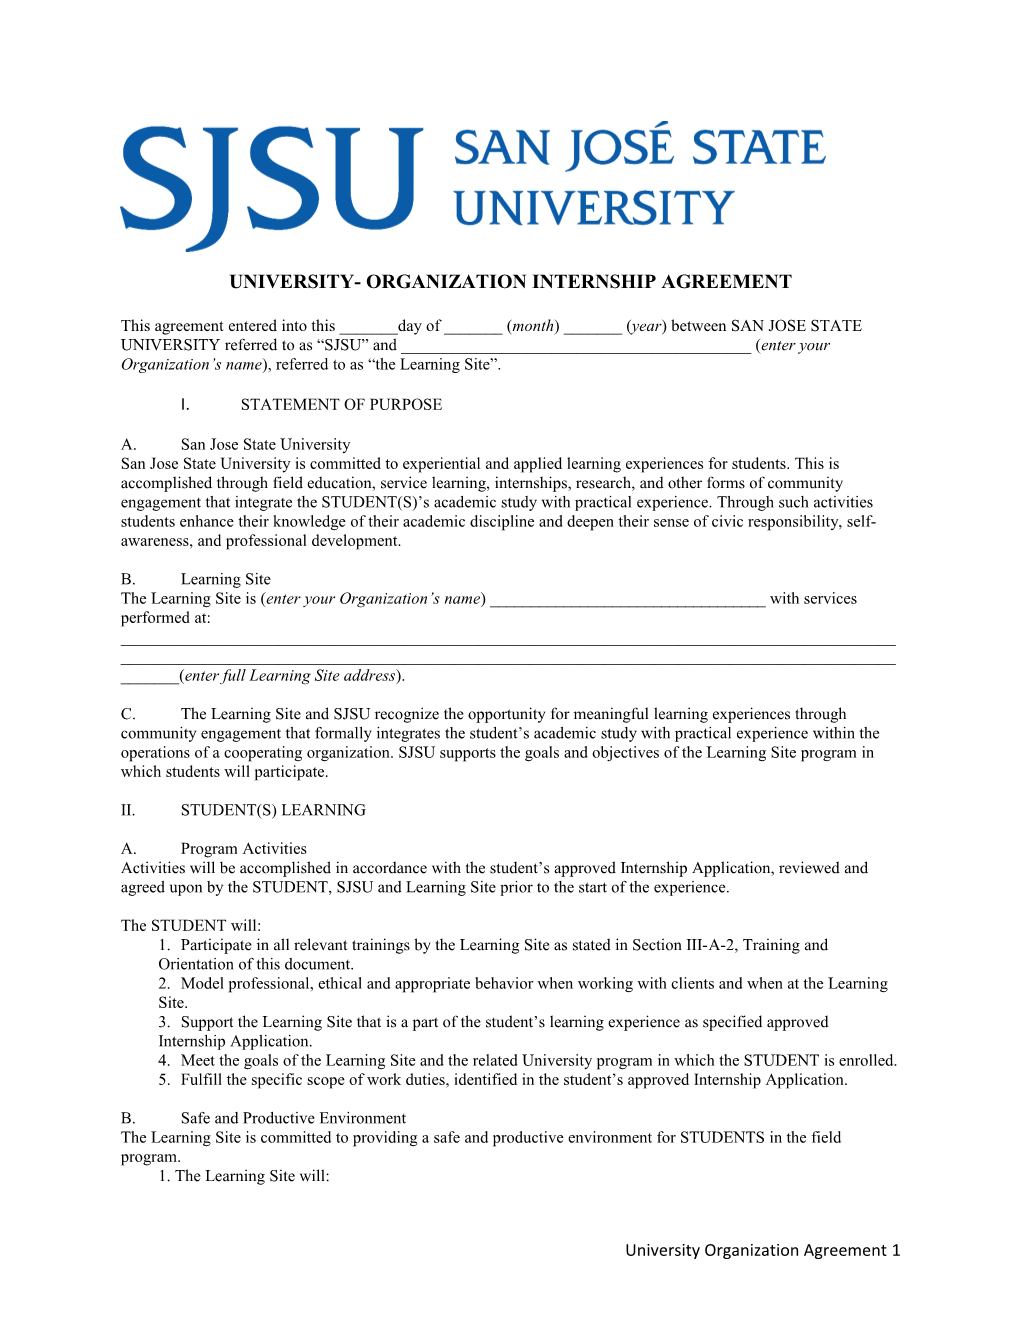 University-Organization Internship Agreement